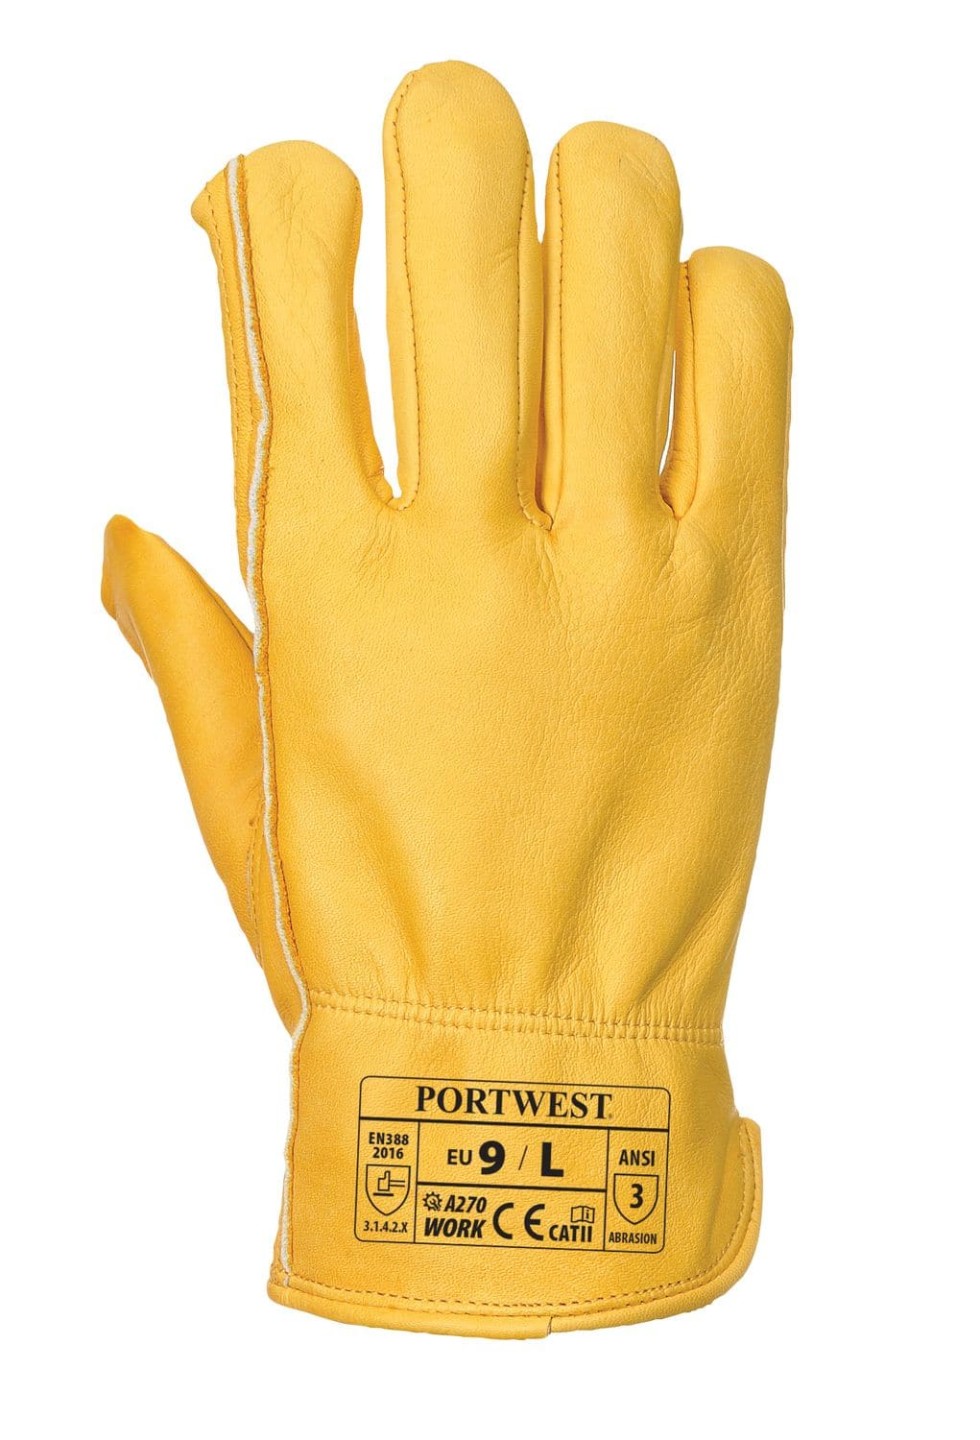 Portwest Classic Driver Glove